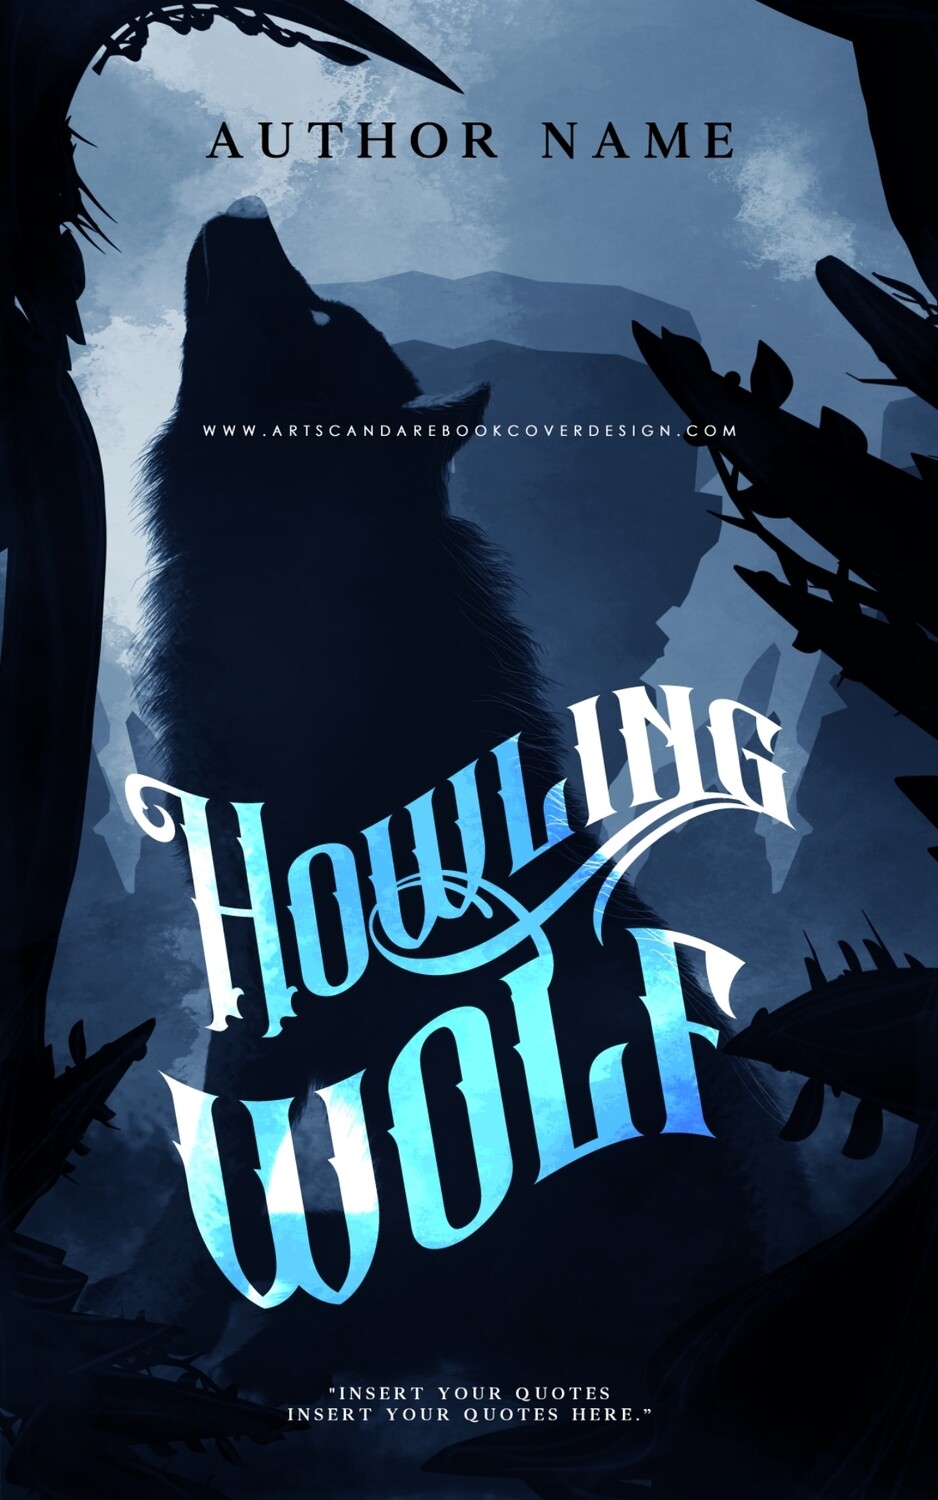 Ebook: Howling Wolf